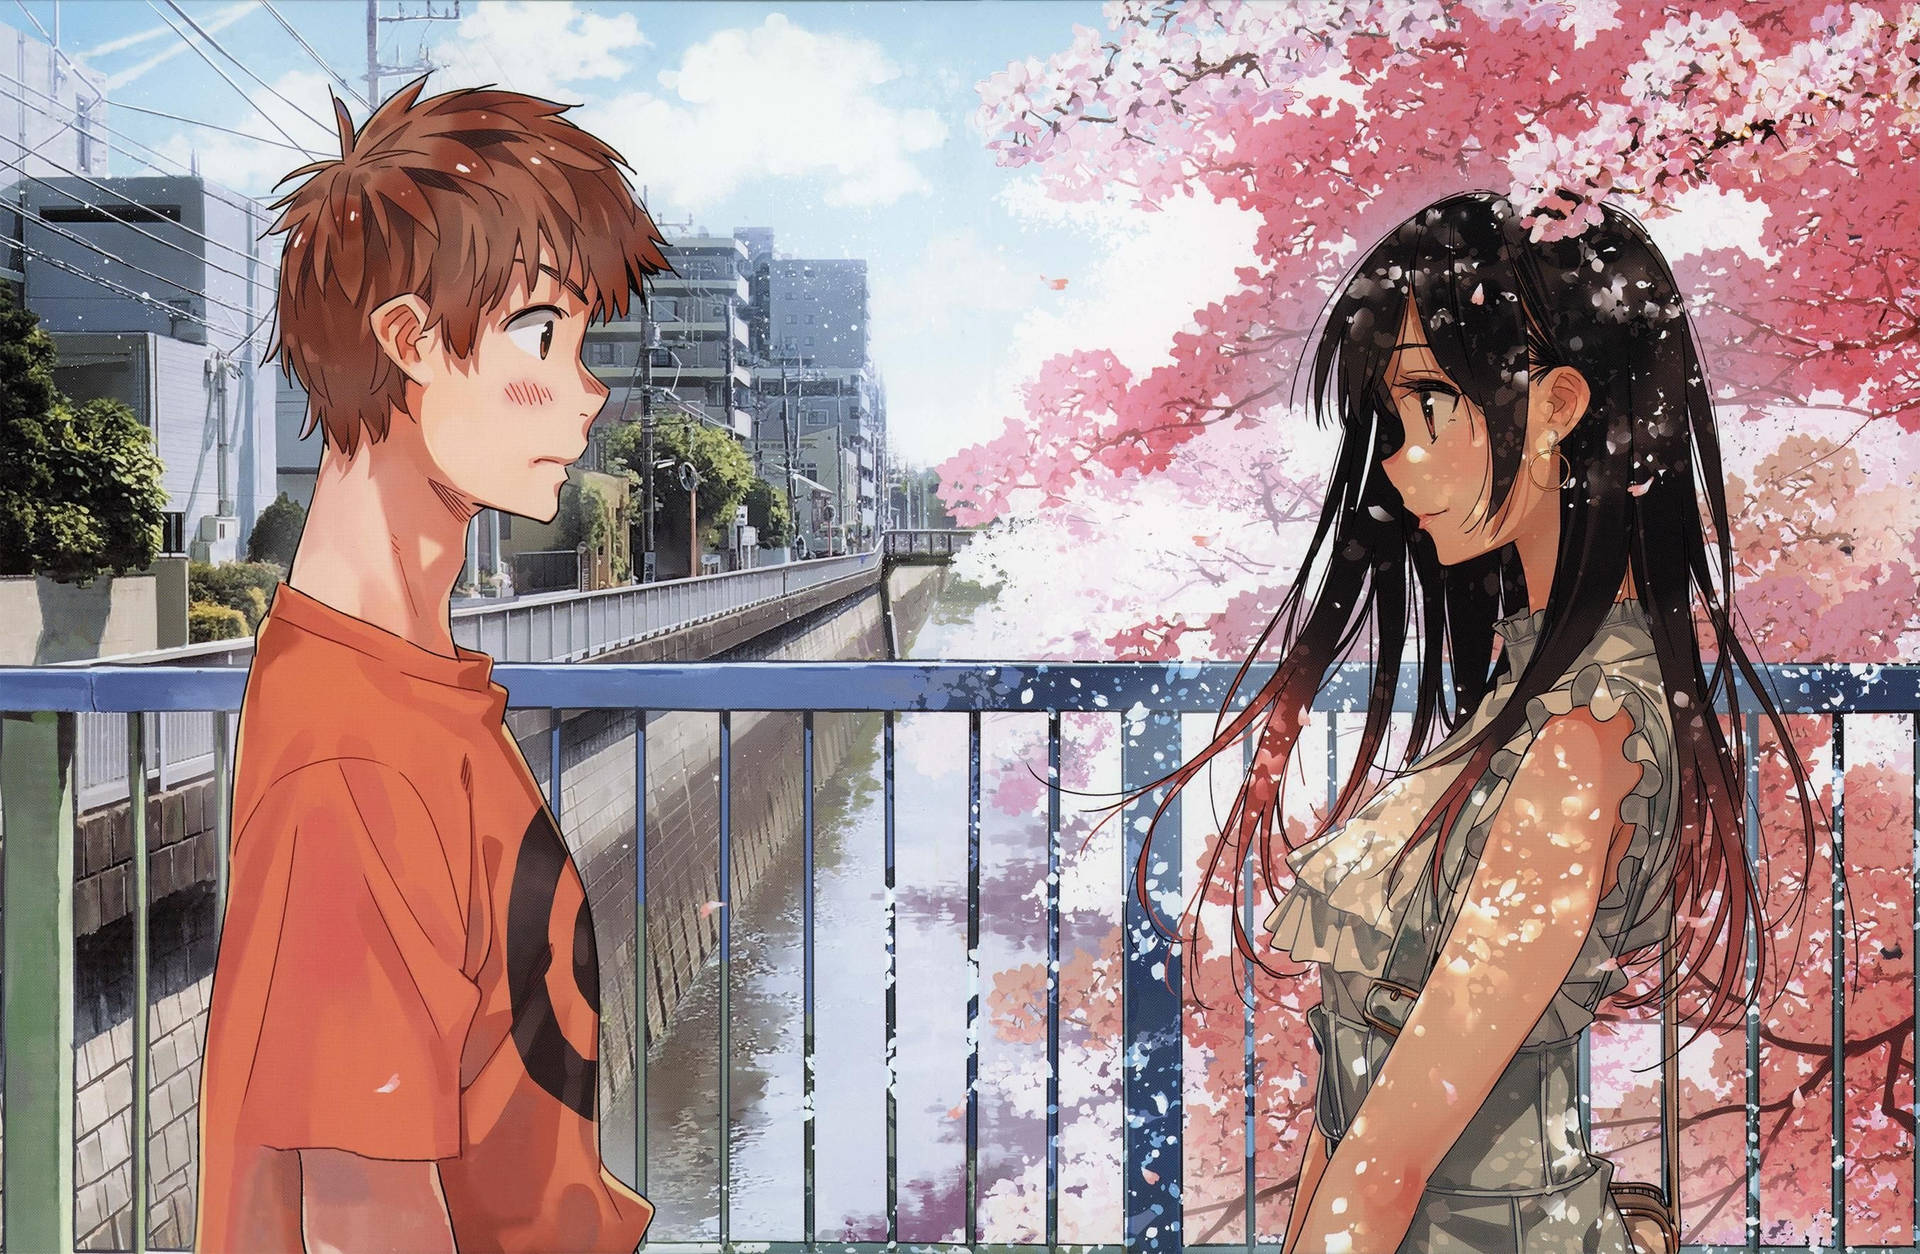 Rent A Girlfriend Chizuru Date With Kazuya Background